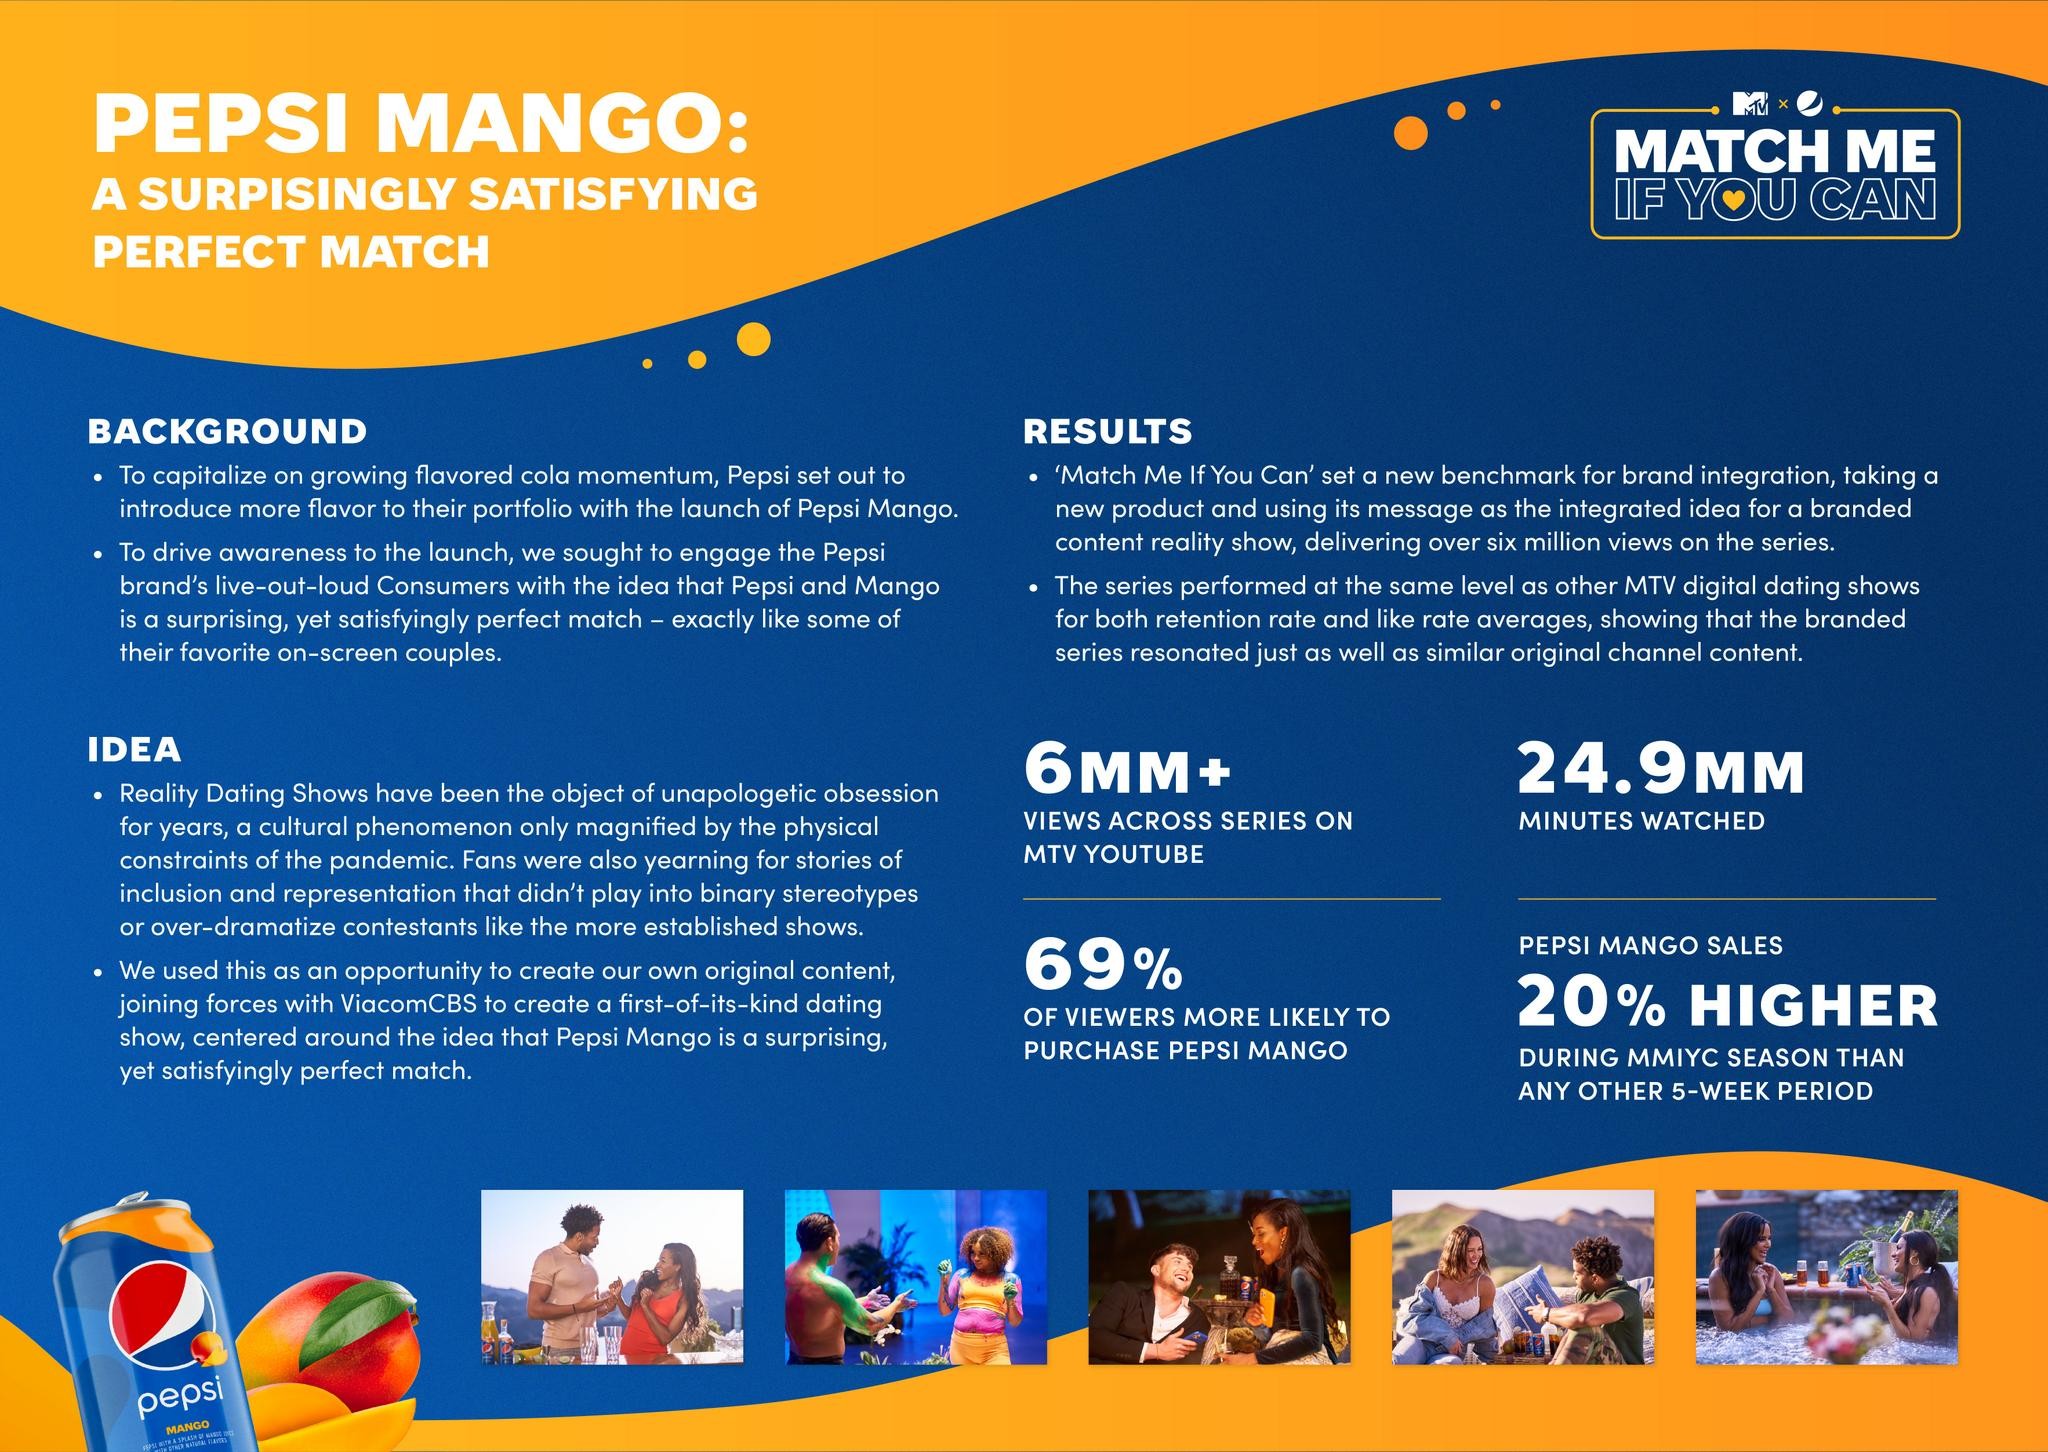 Pepsi Mango: Match Me If You Can